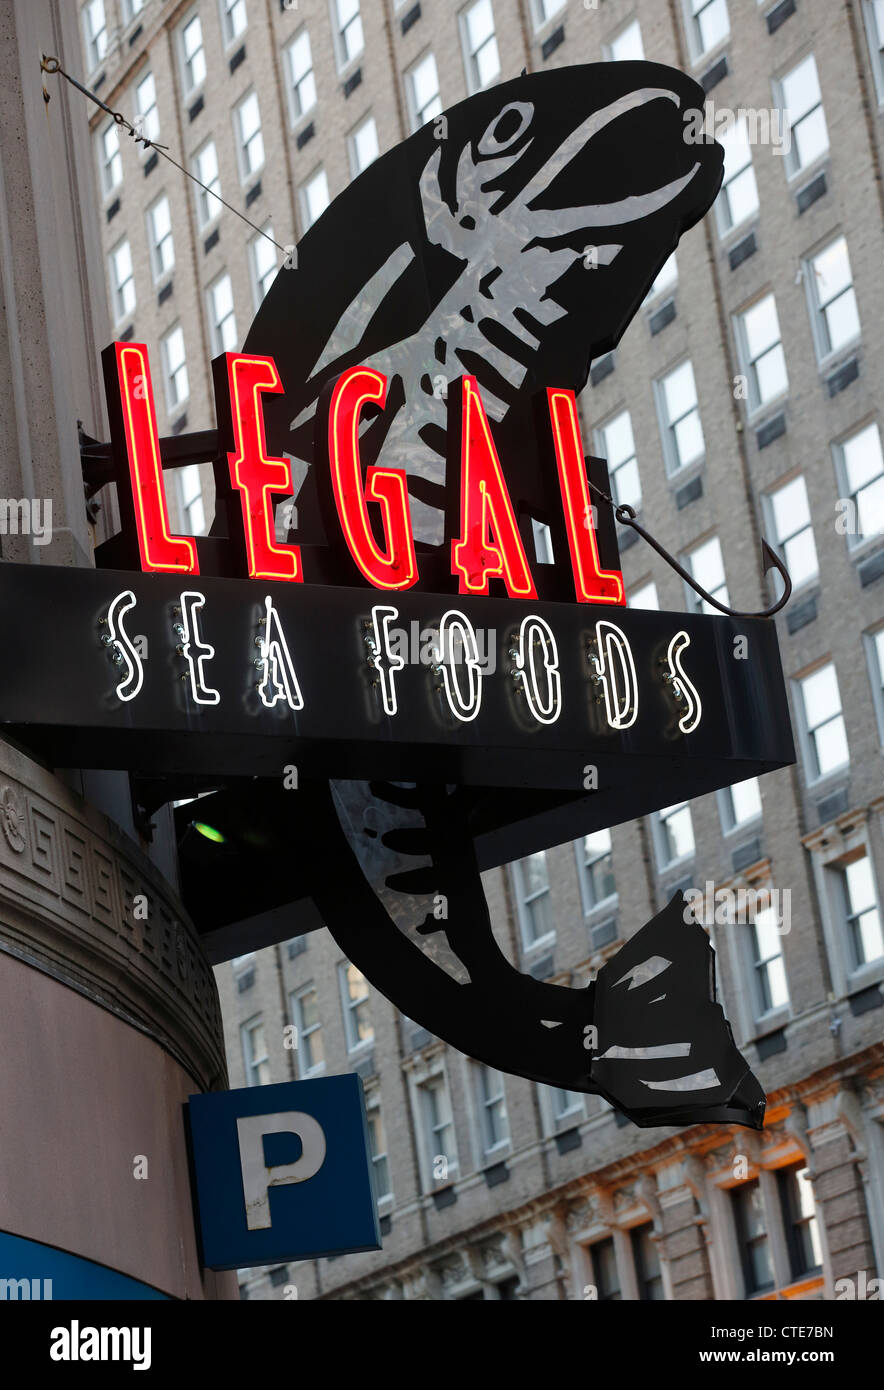 Legal Seafoods restaurante signo de neón, Boston, Massachusetts Foto de stock